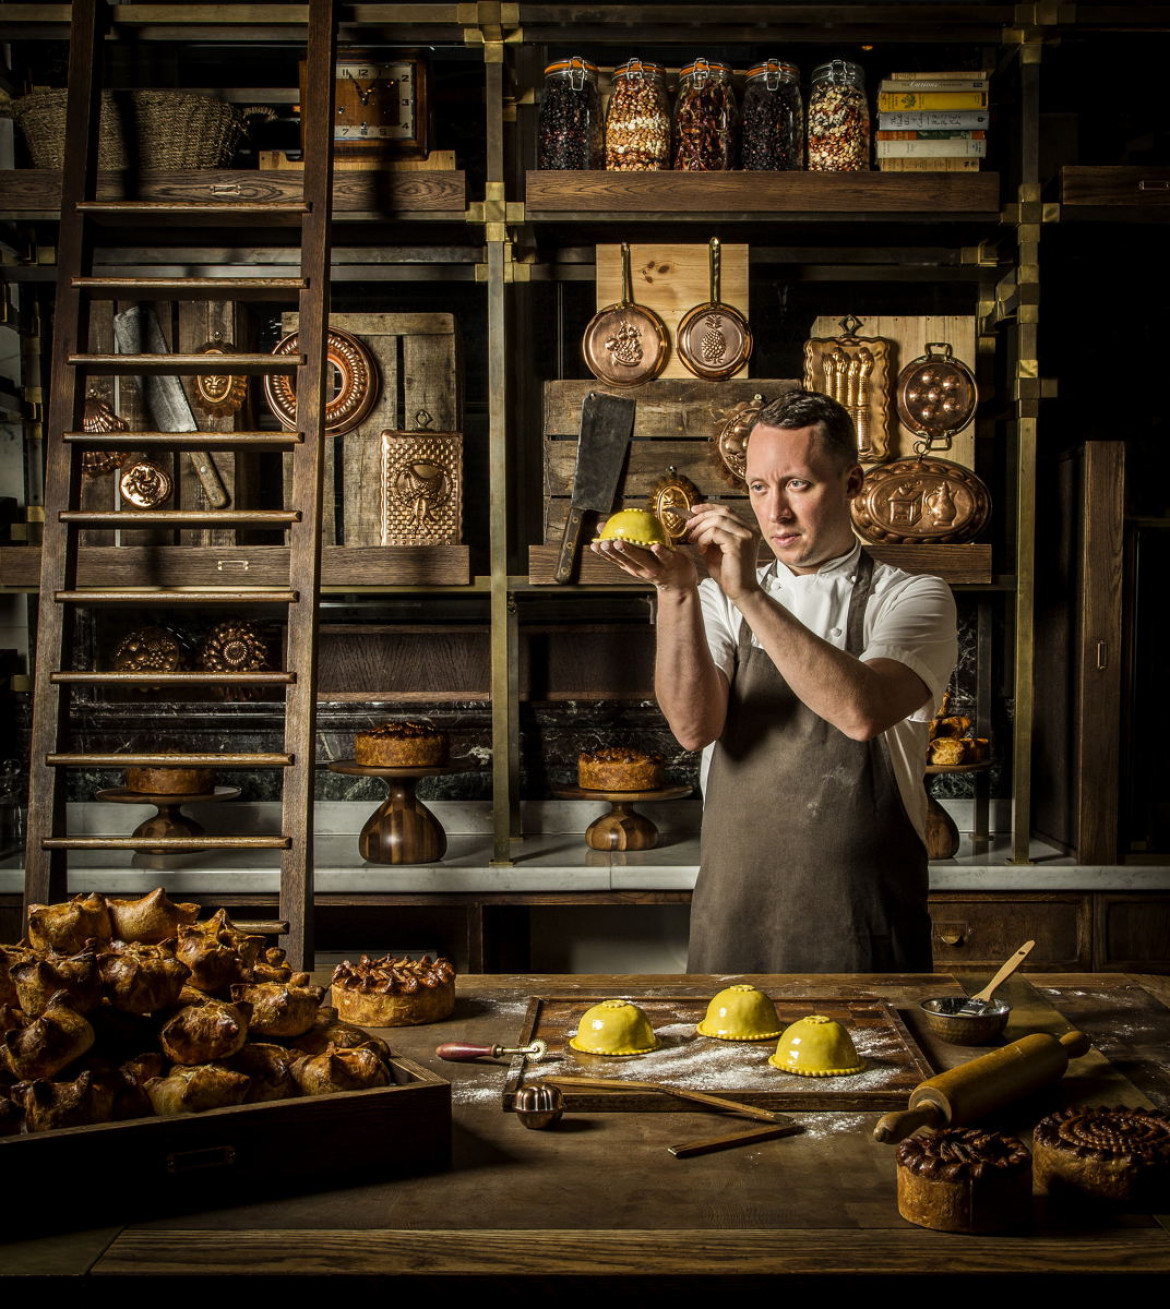 fot. John Carey, "Calun in his Pie Room", 1. miejsce w kategorii The Philip Harben Award for Food in Action